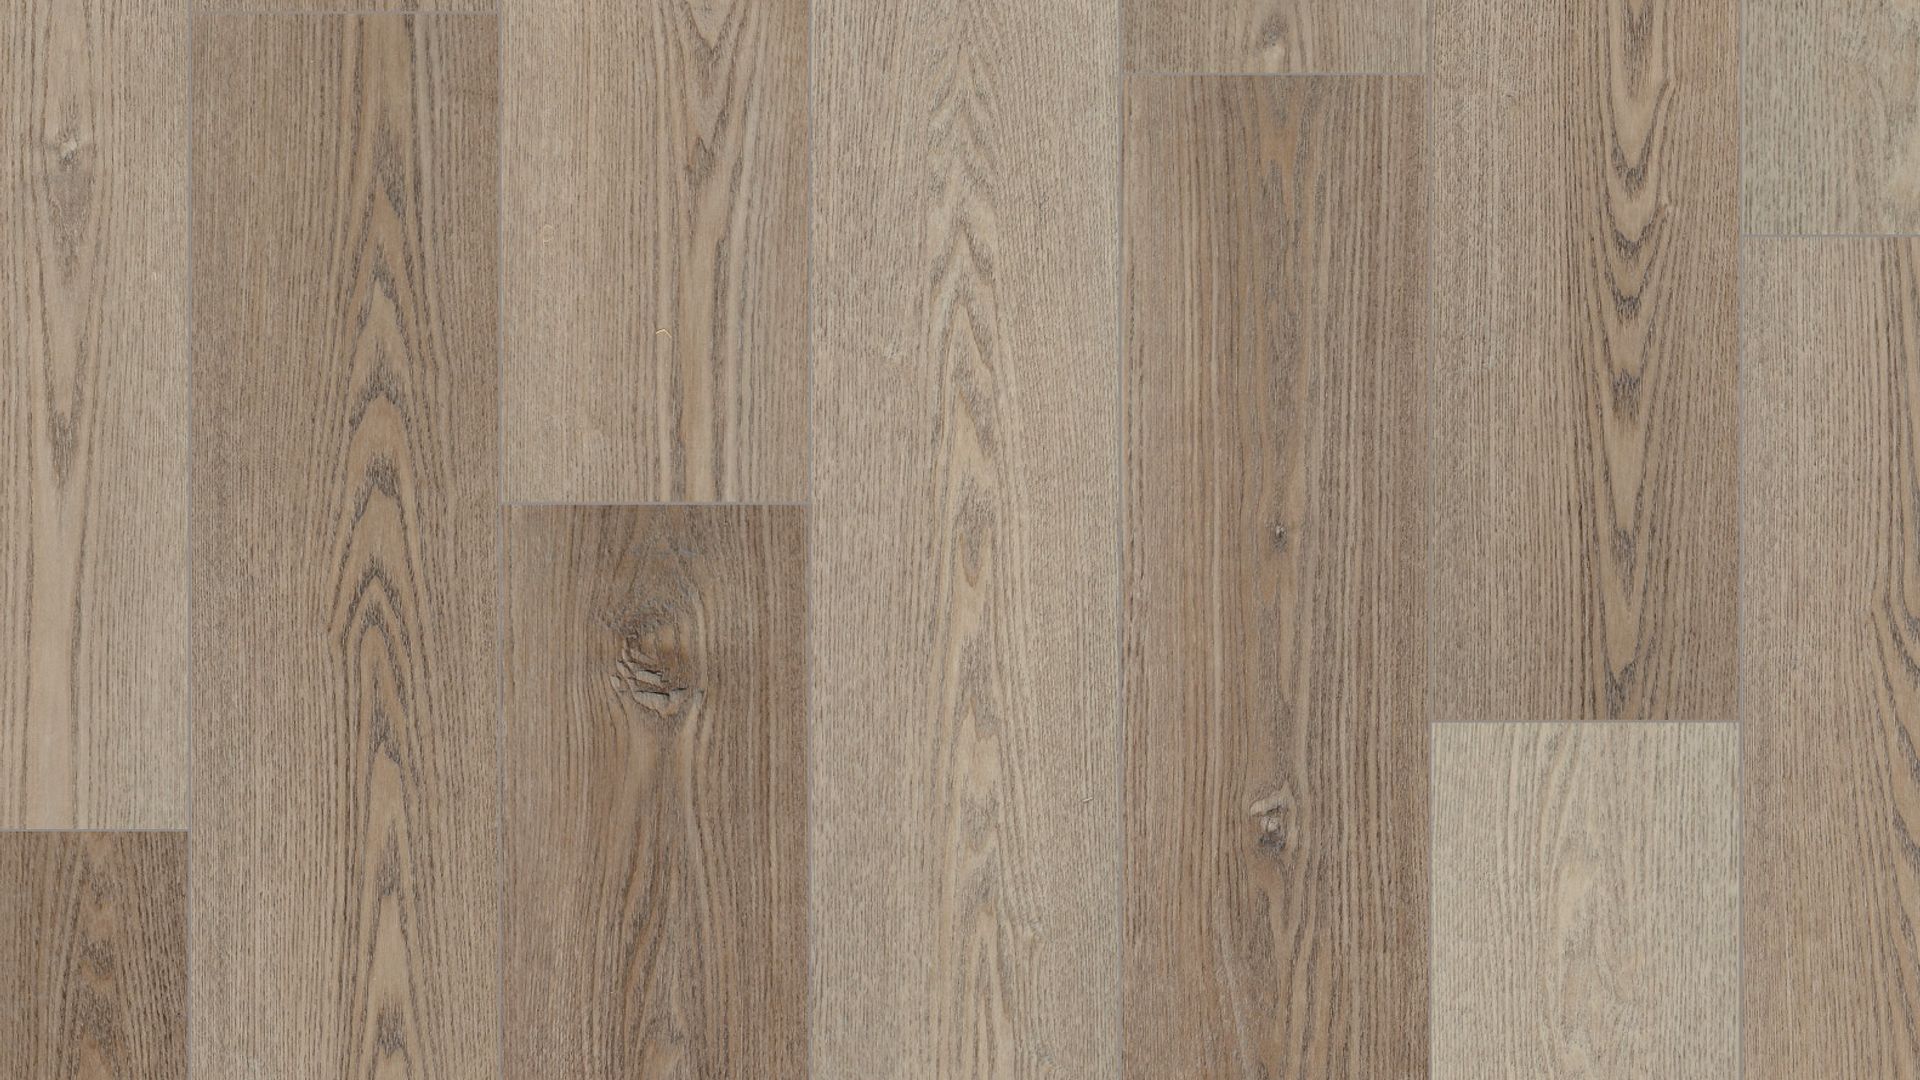 Vv492 02009 Vinyl Plank Flooring Coretec, Seamless Vinyl Flooring